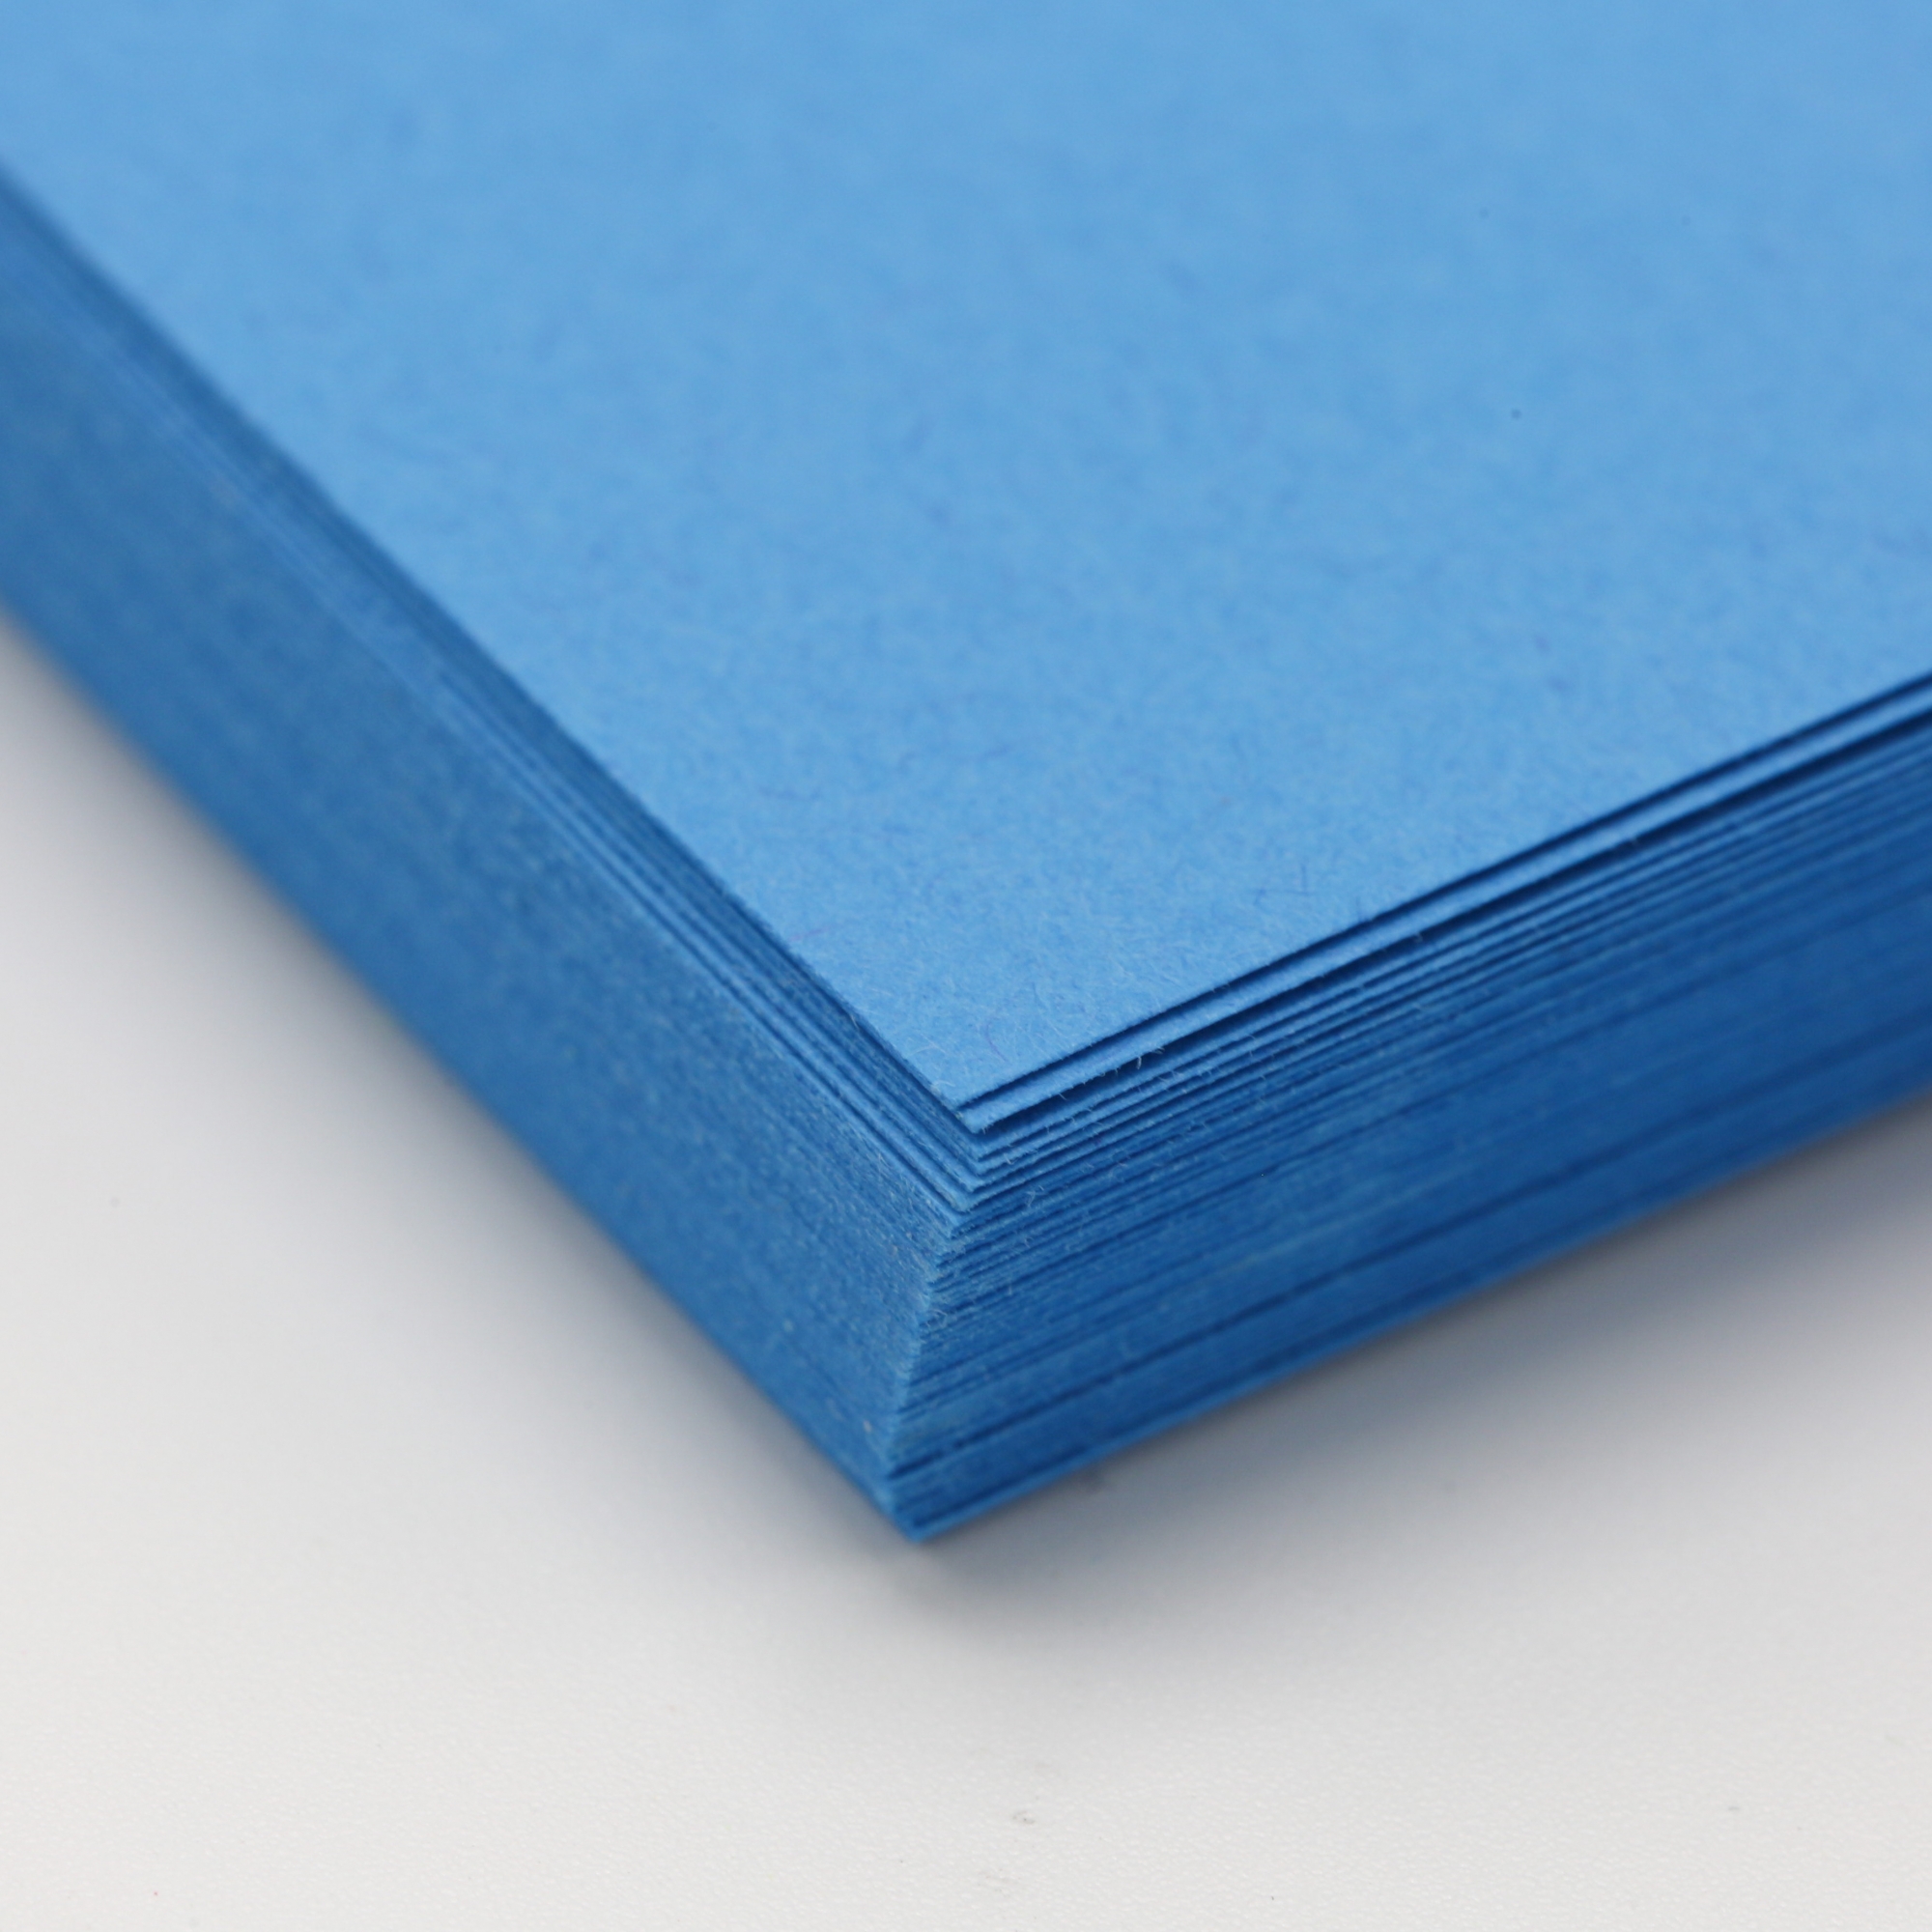 Astrobright Celestial Blue 8-1/2x11 24lb 500/pkg, Paper, Envelopes,  Cardstock & Wide format, Quick shipping nationwide